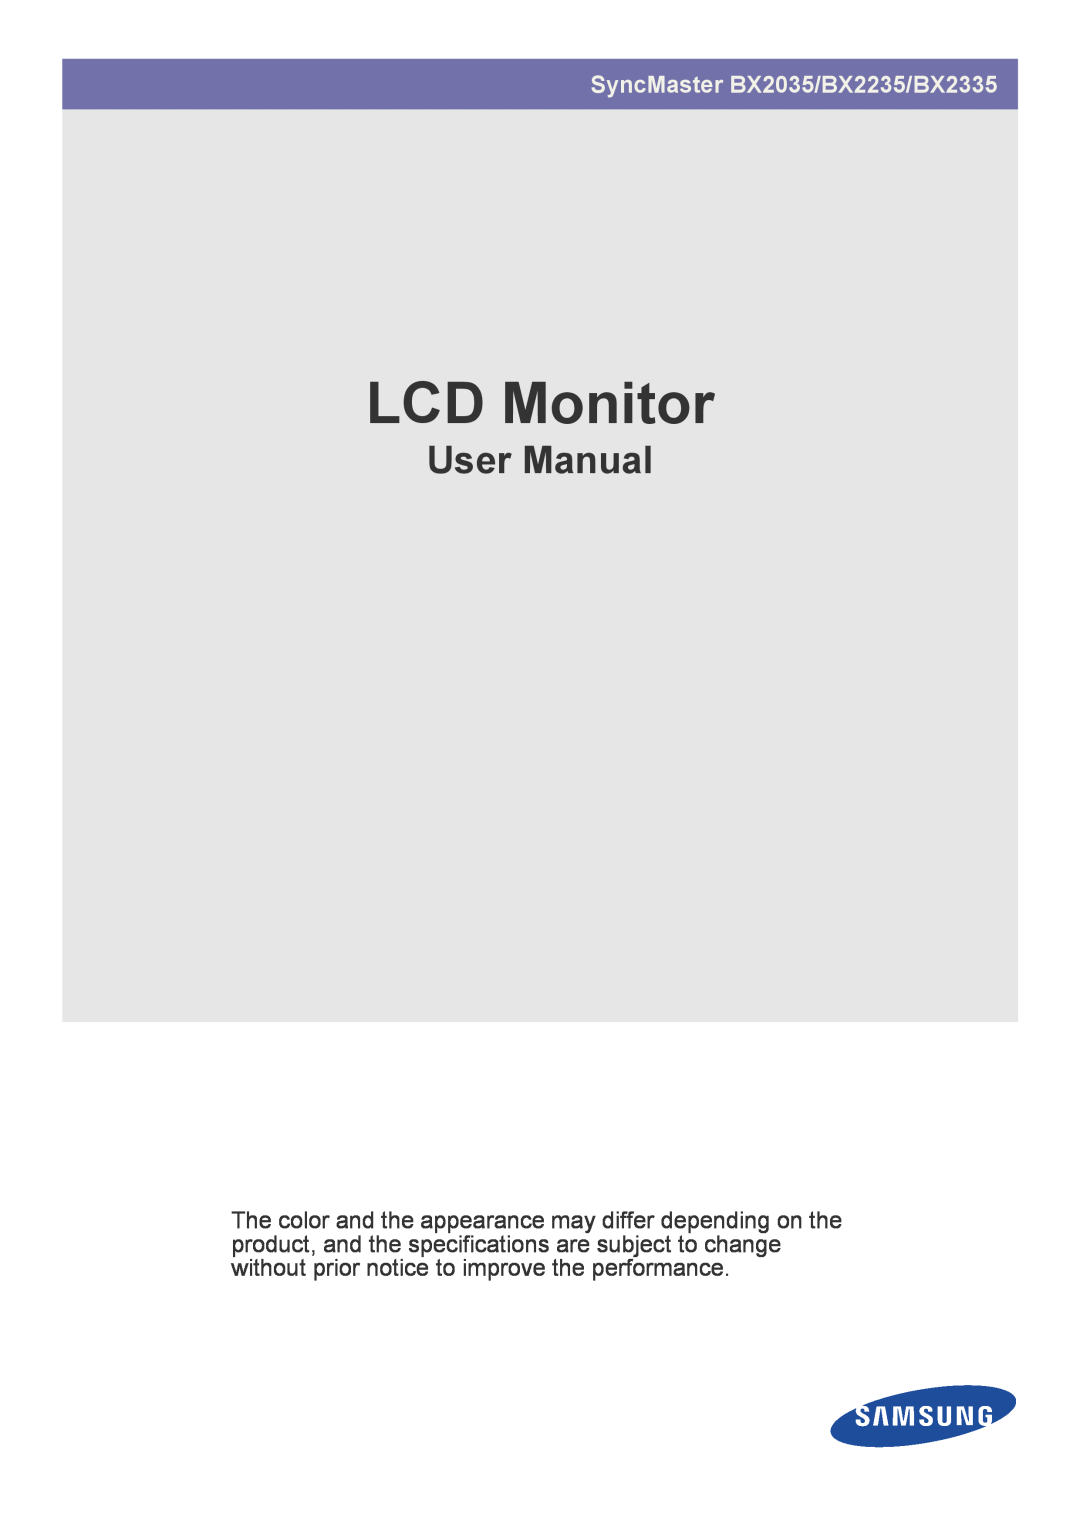 Samsung user manual LCD Monitor, User Manual, SyncMaster BX2035/BX2235/BX2335 